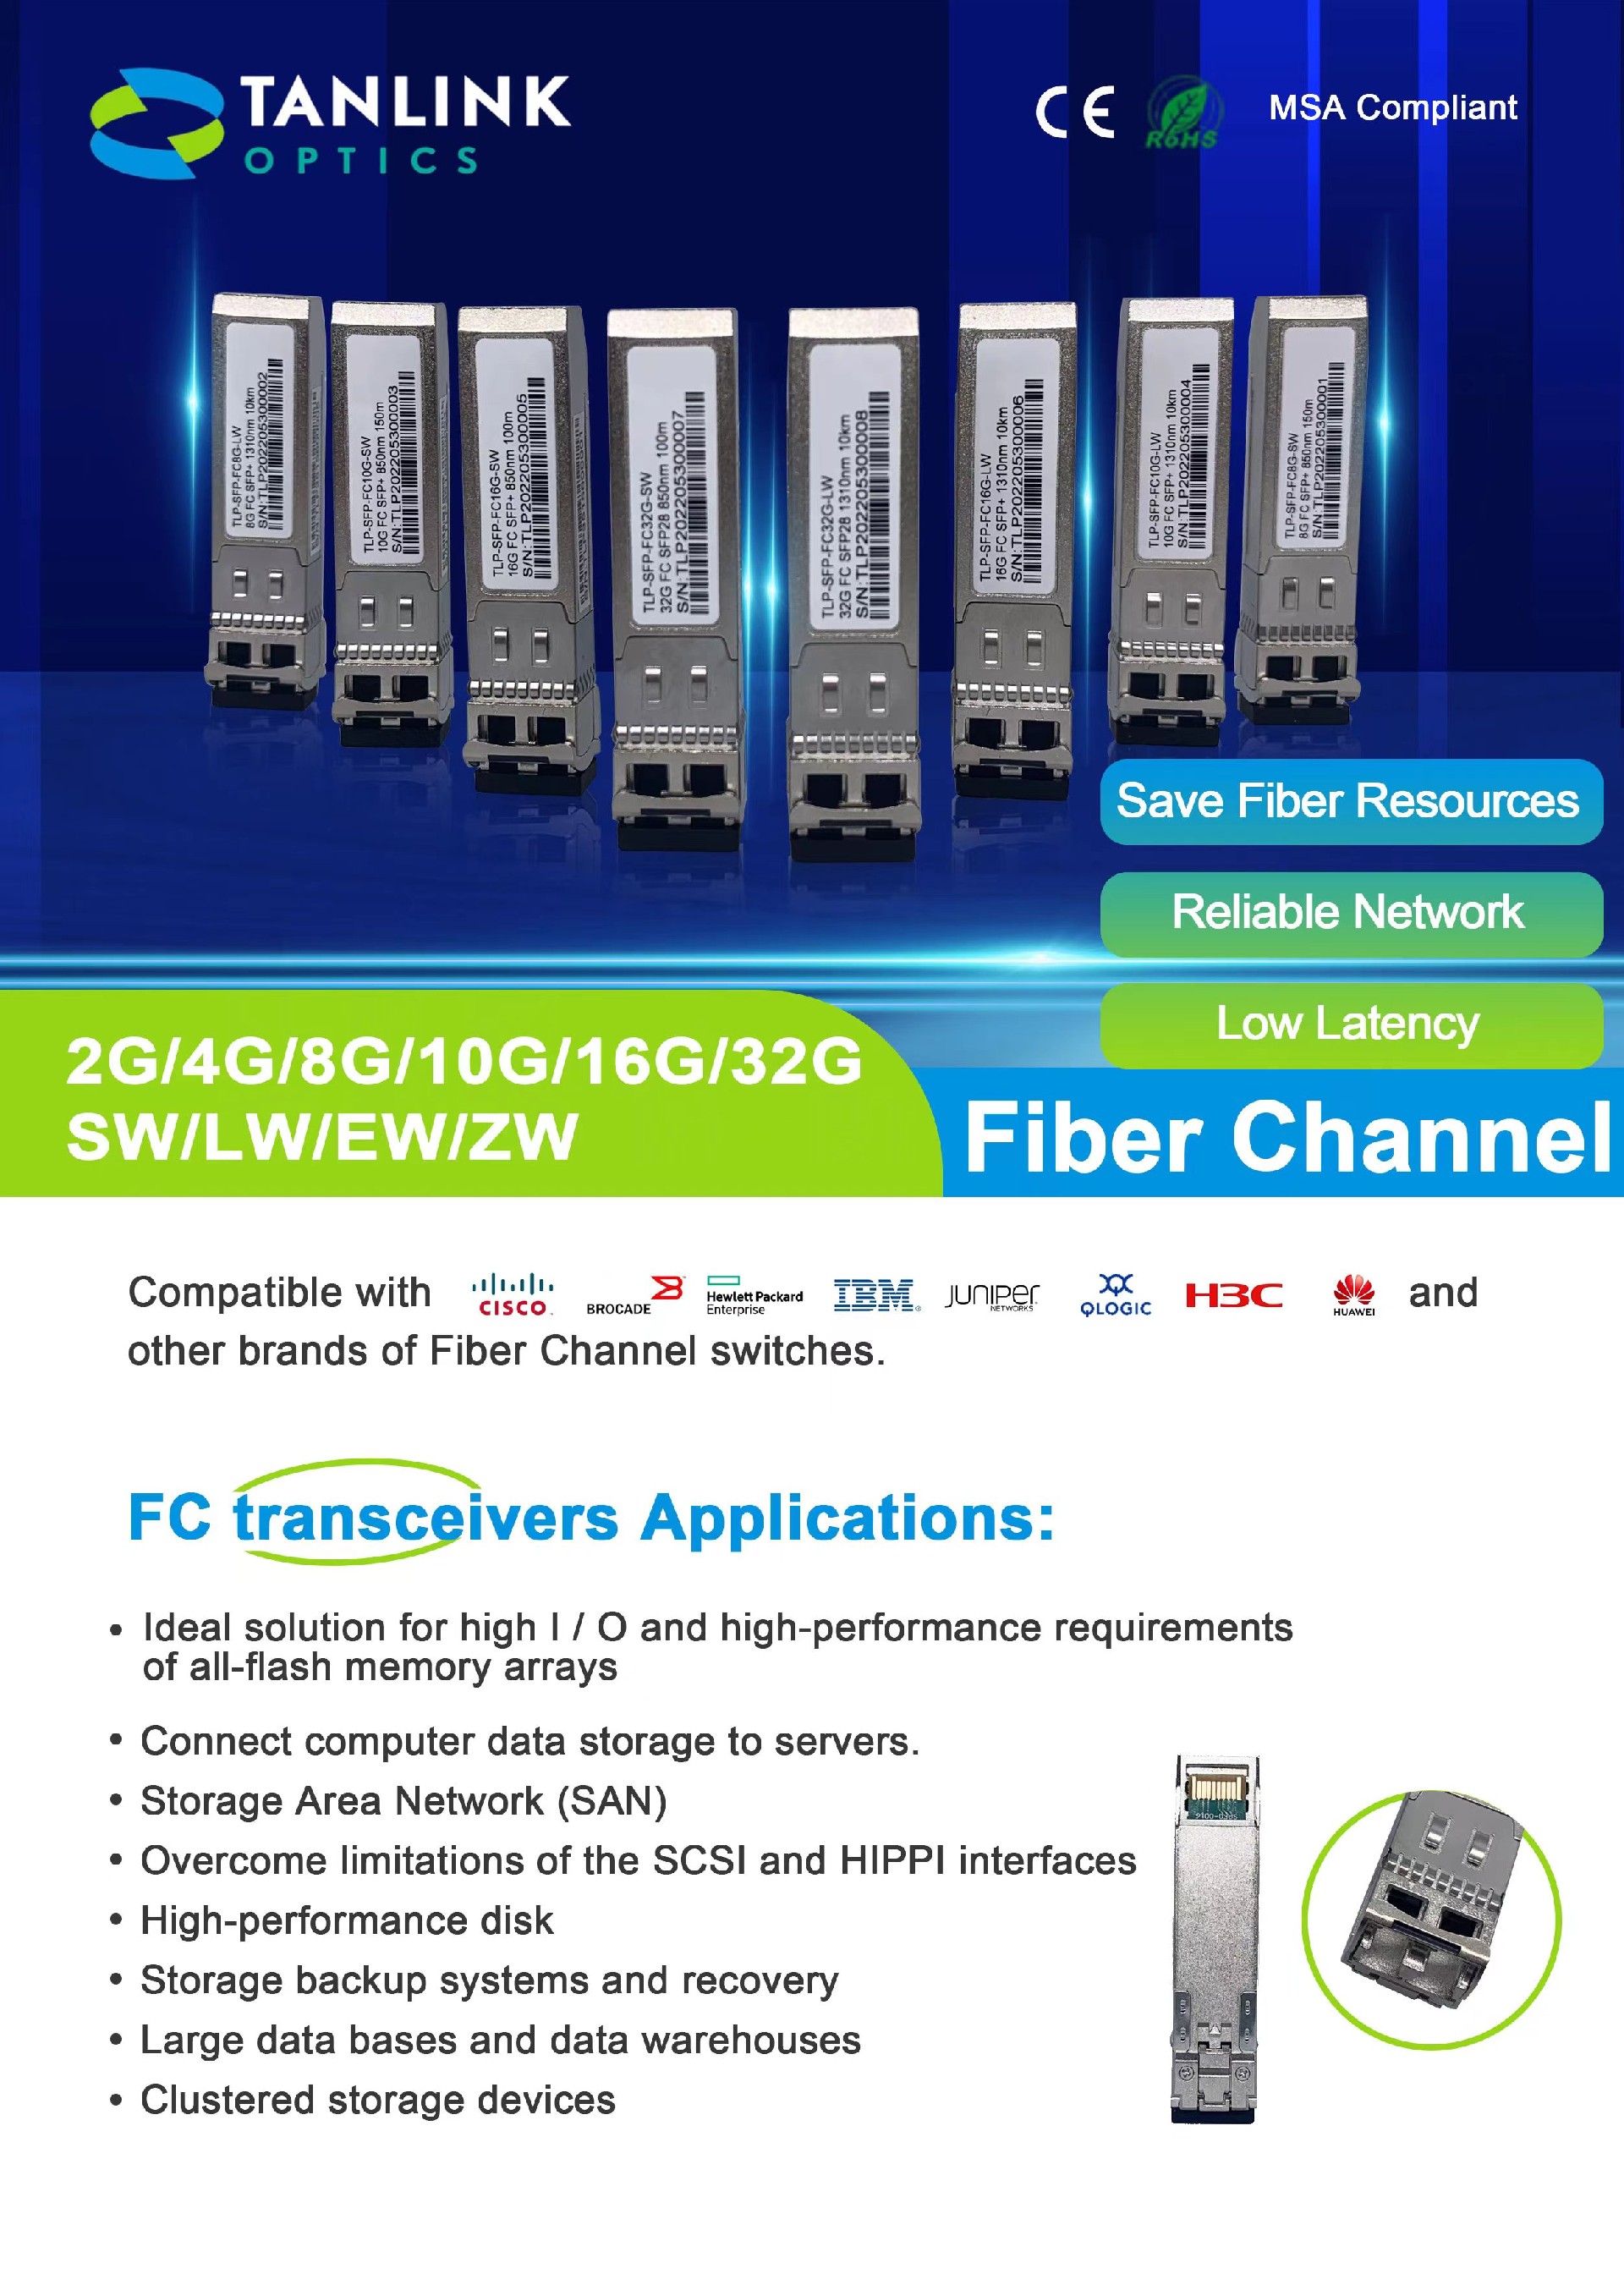 Tanlink's full series of Fiber Channel Transceivers